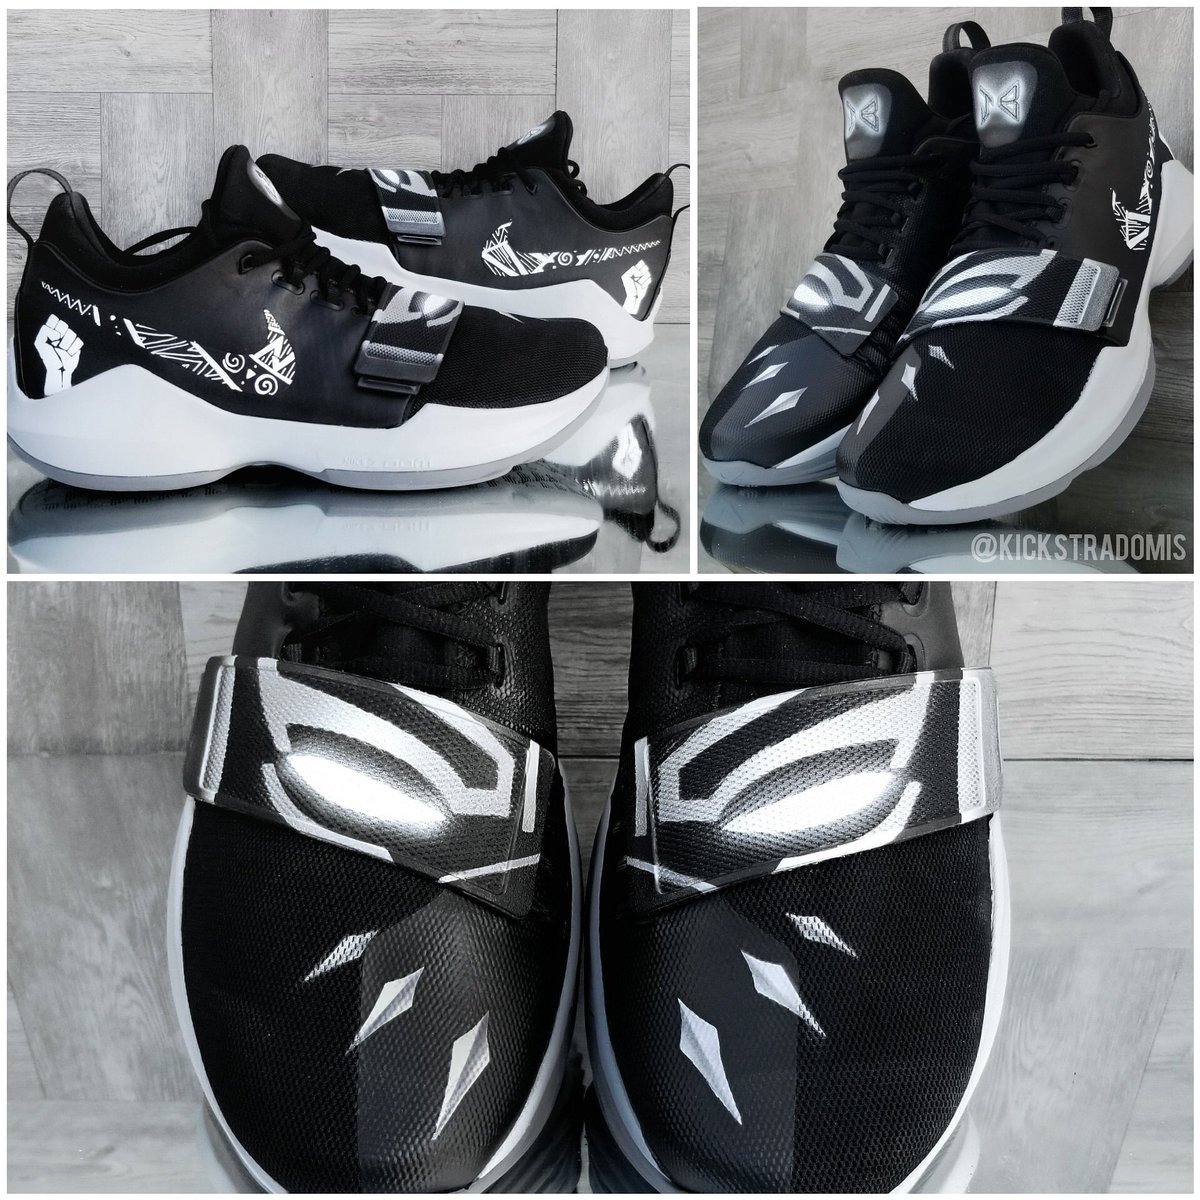 Jordan bell had some black panther custom kicks made. ???? wakanda forever. (via ...1200 x 1200